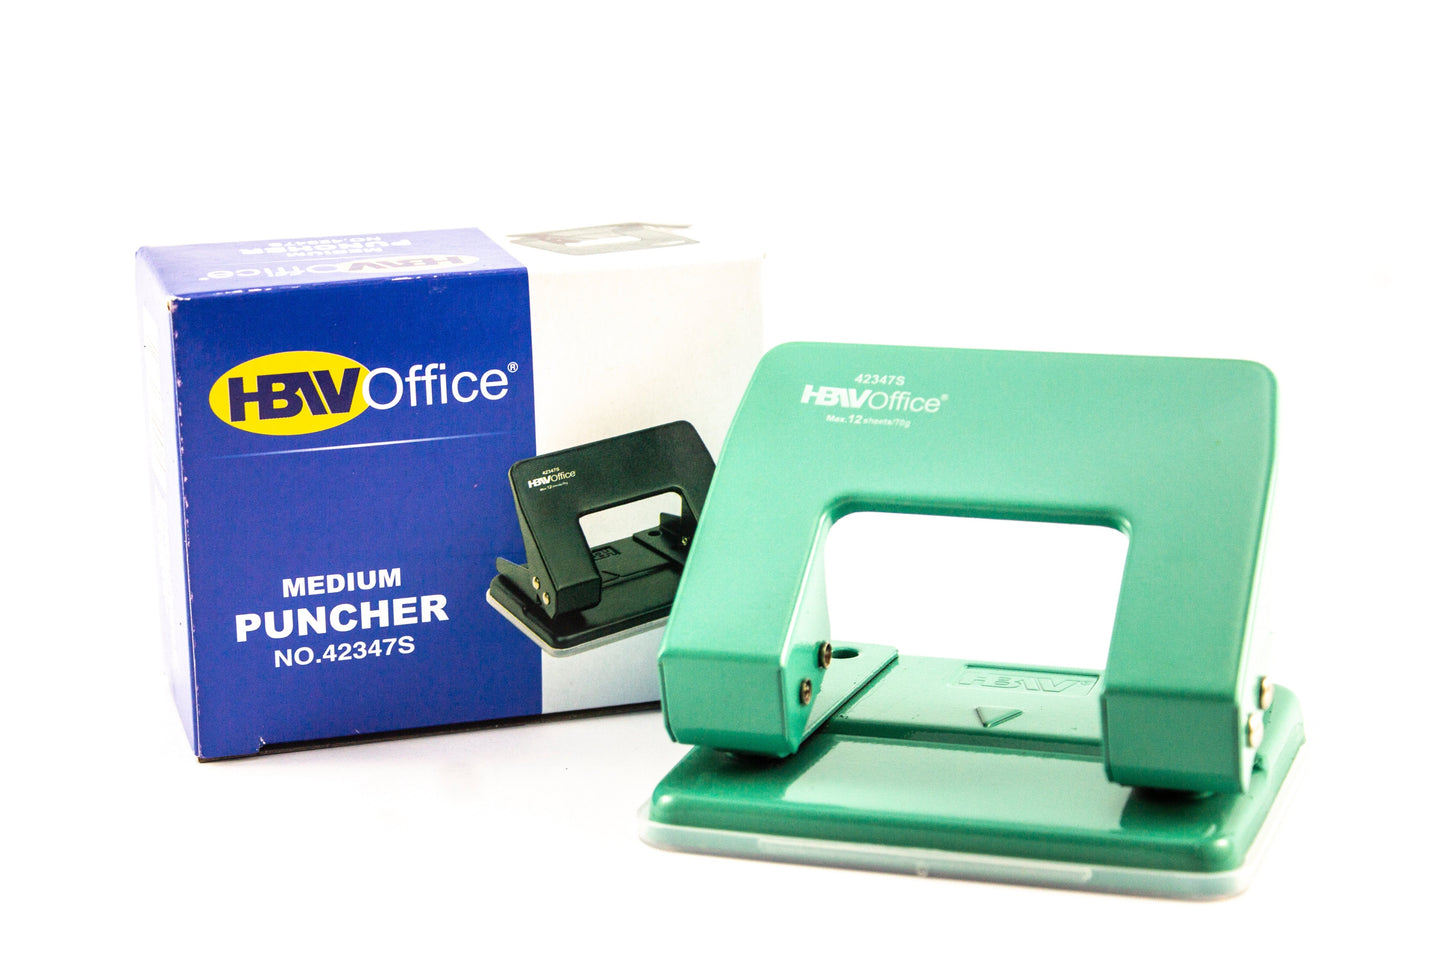 HBW Office Mini Puncher No. 42347S